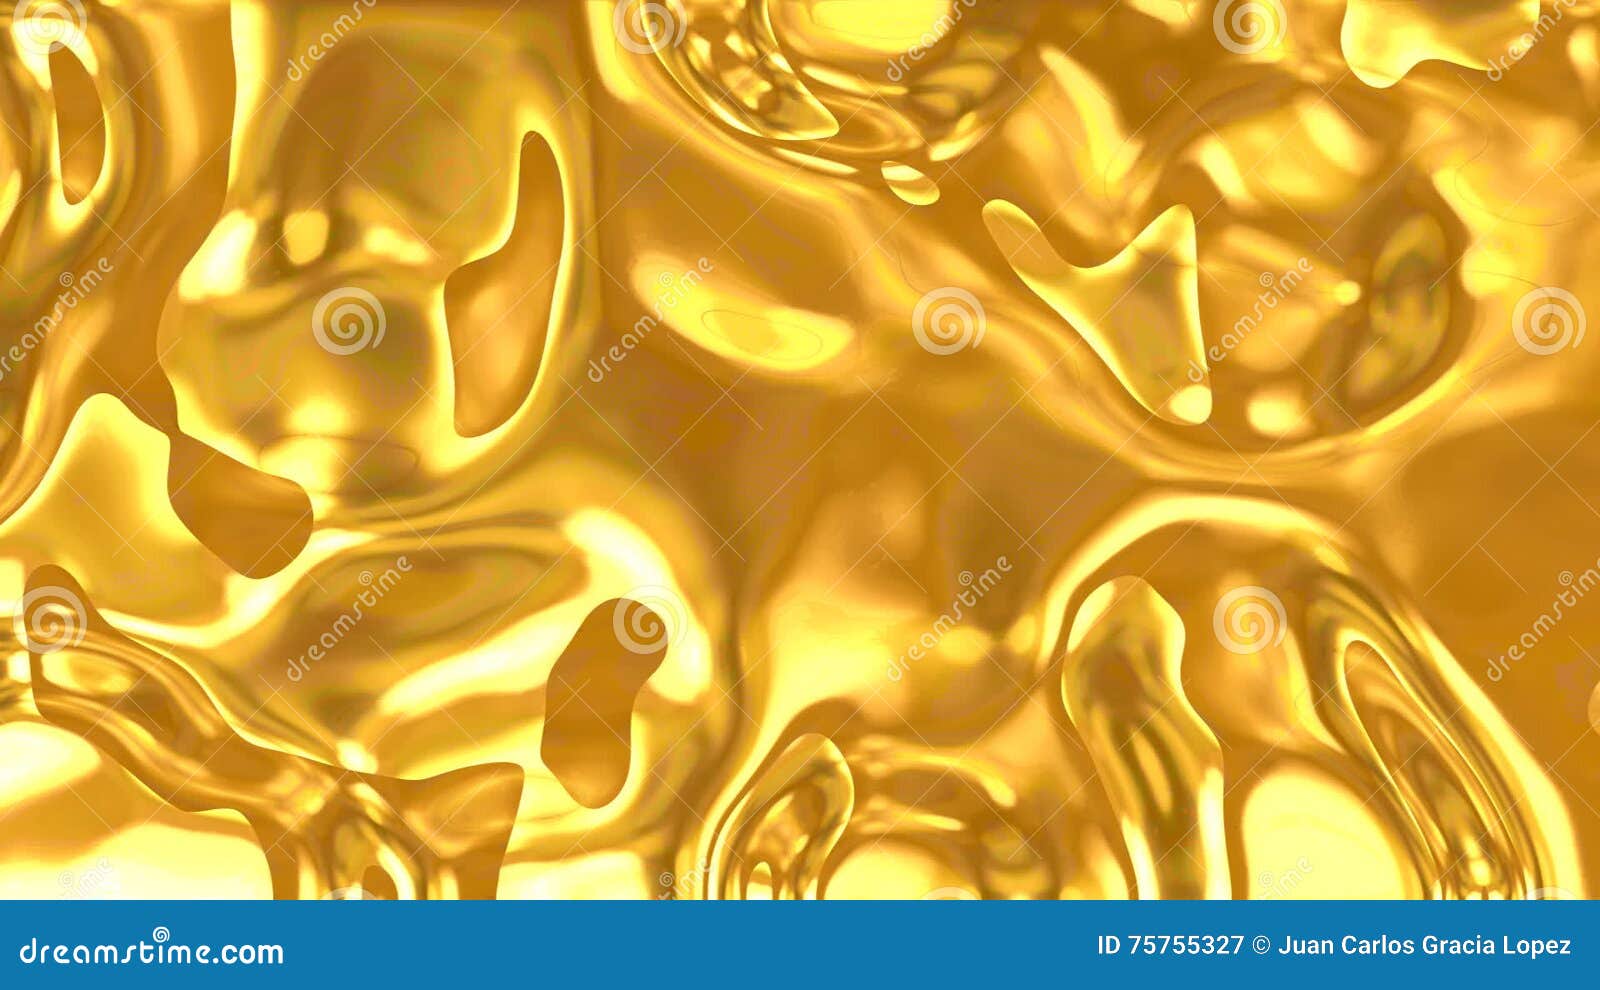 Liquid gold motion organic background. Shine glitter fluid